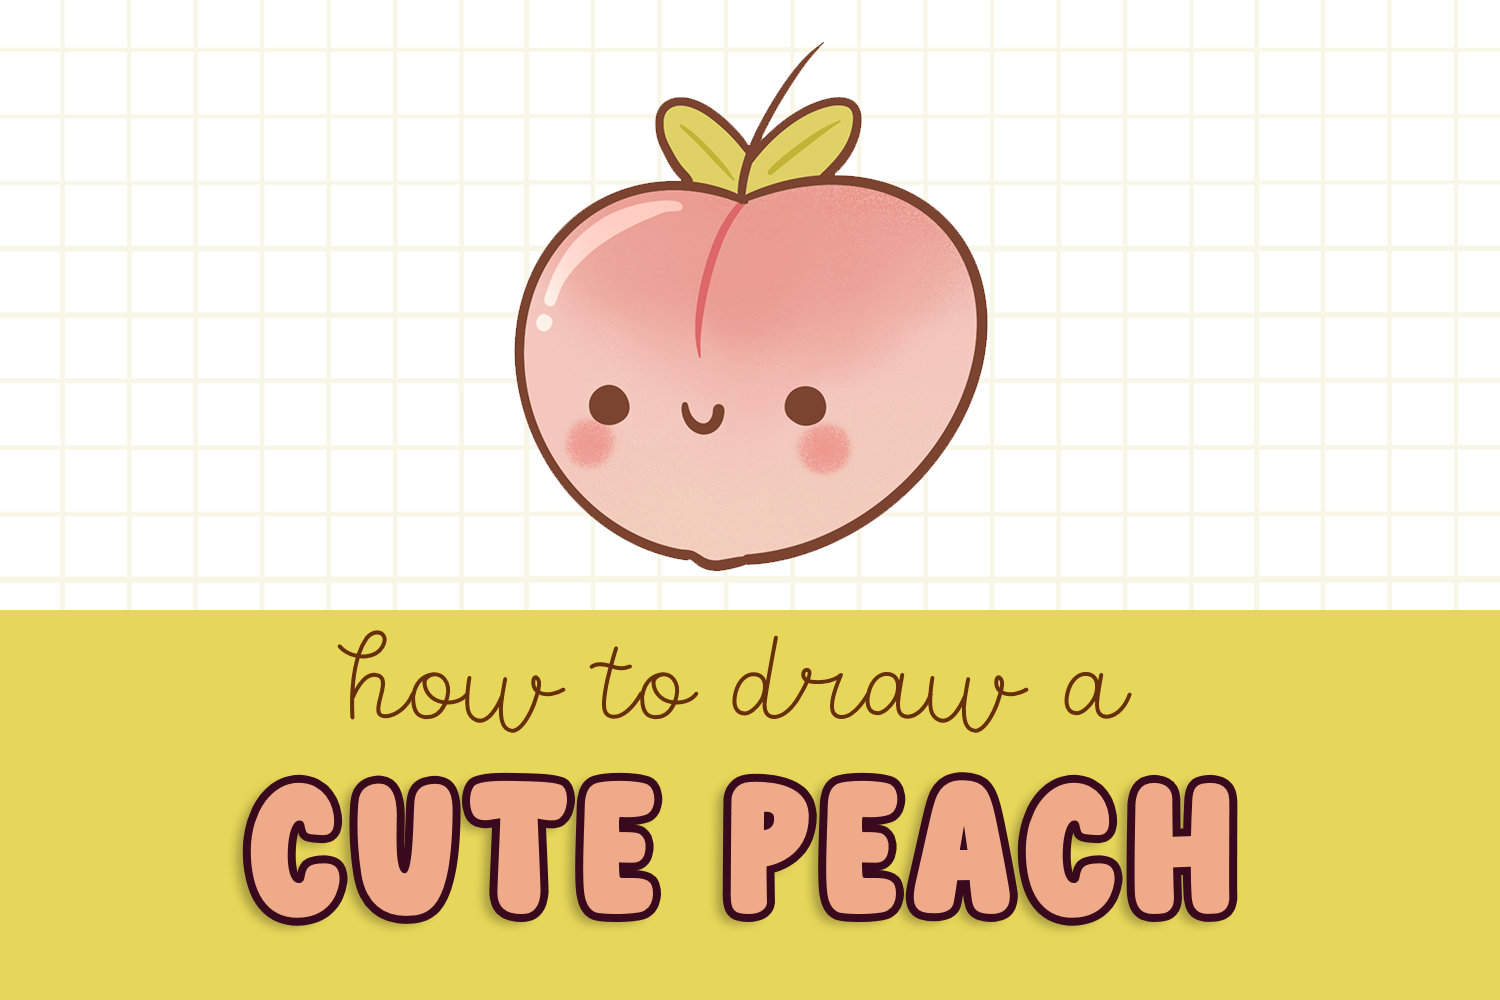 How to Draw a Cute Peach Draw Cartoon Style!